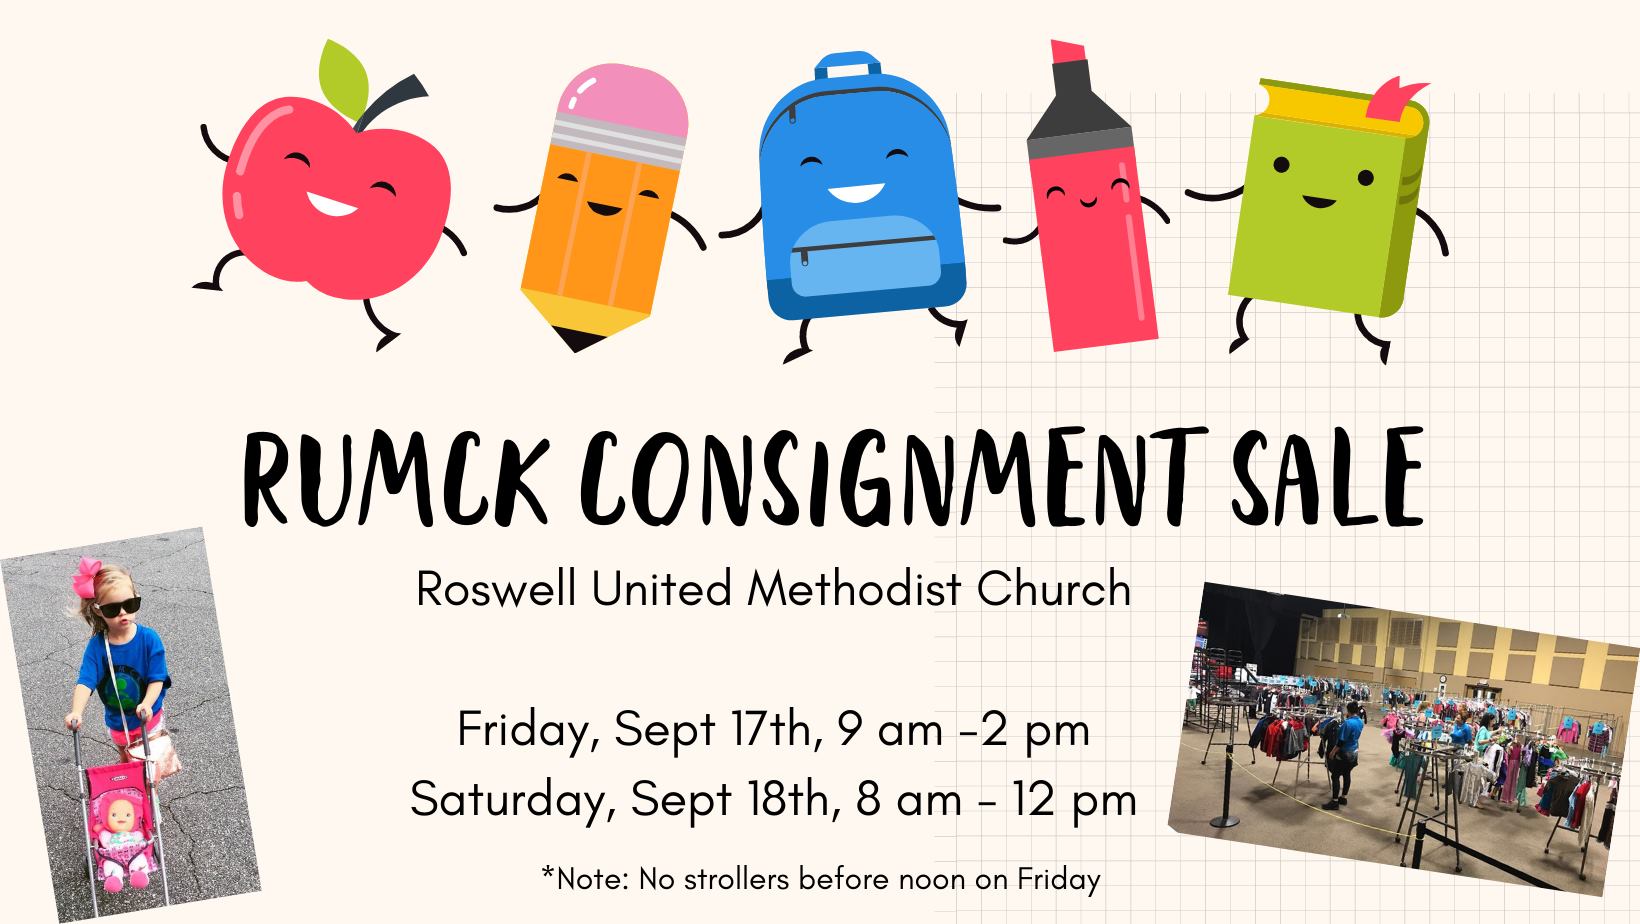 Roswell United Methodist Church Preschool and Kindergarten (RUMCK) Children’s Consignment Sale.